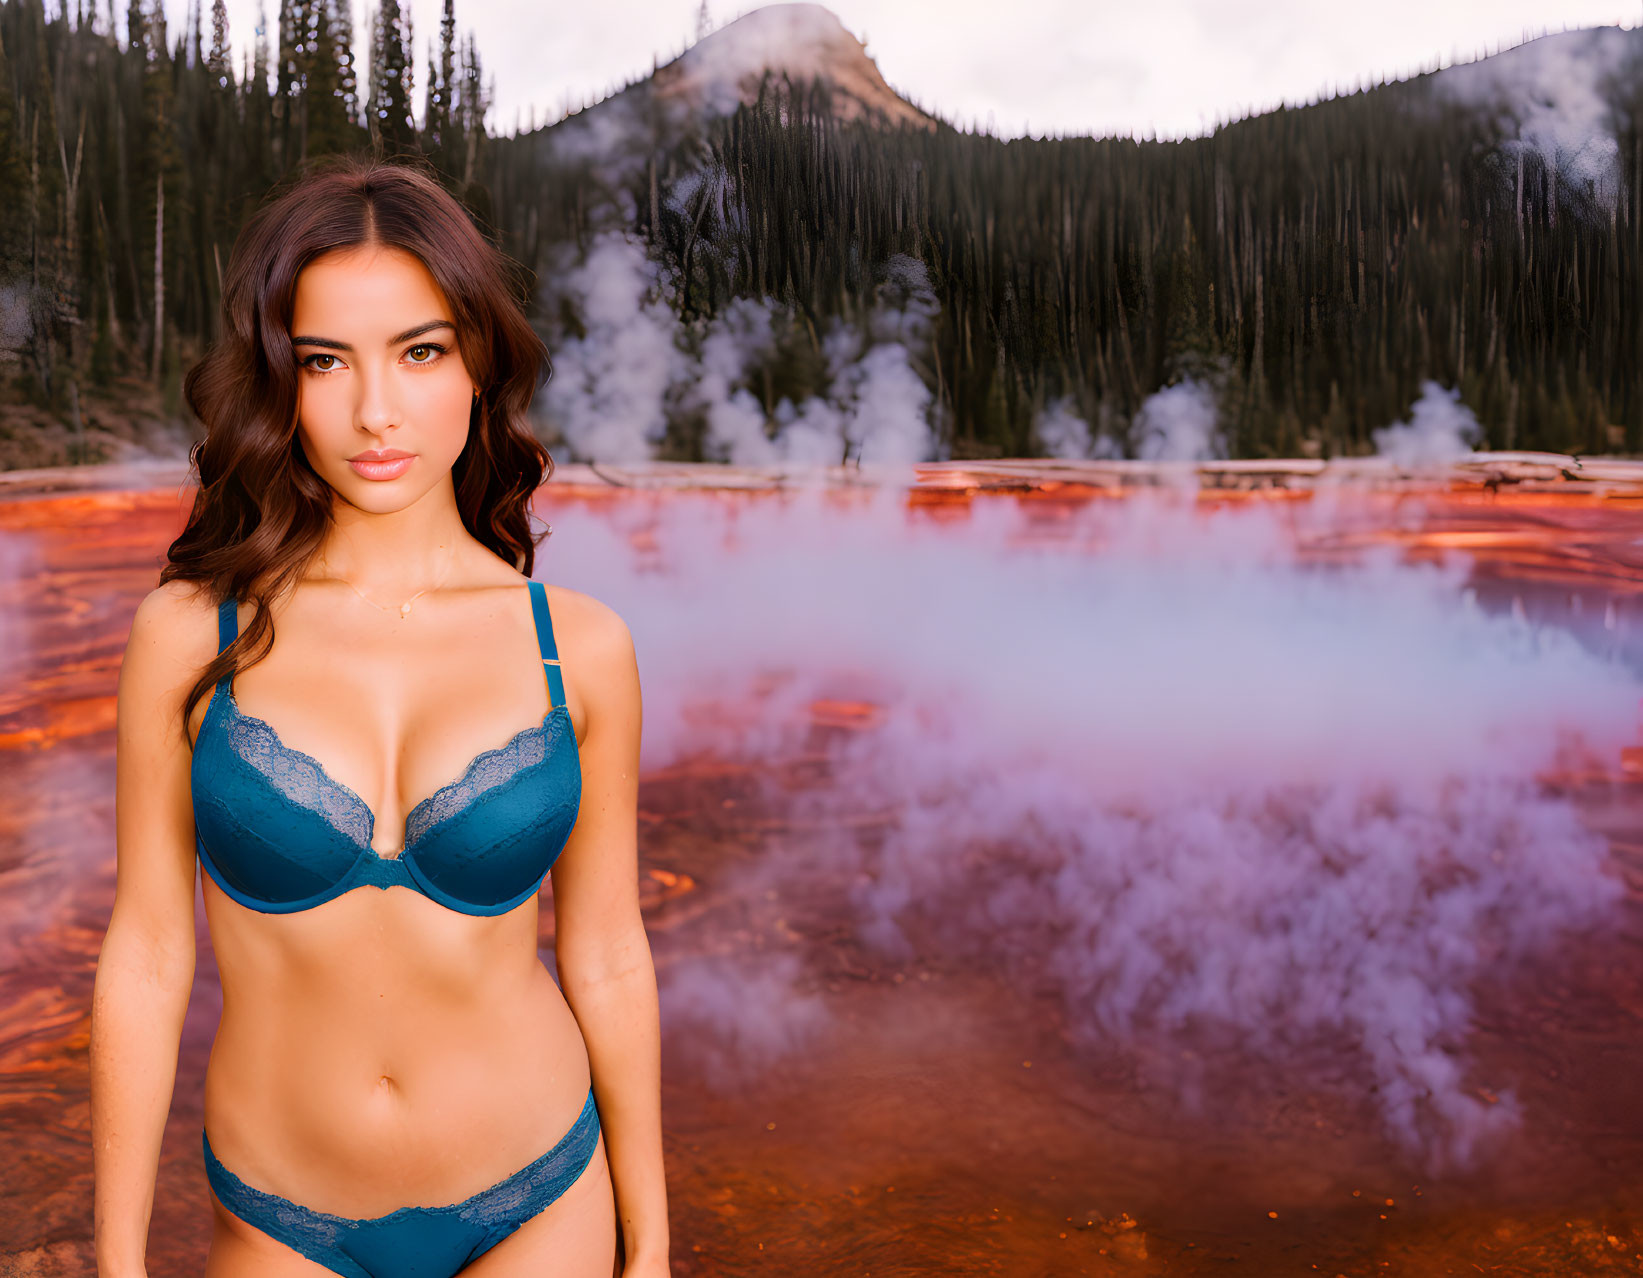 A beautiful girl at a Yellowstone hot spring